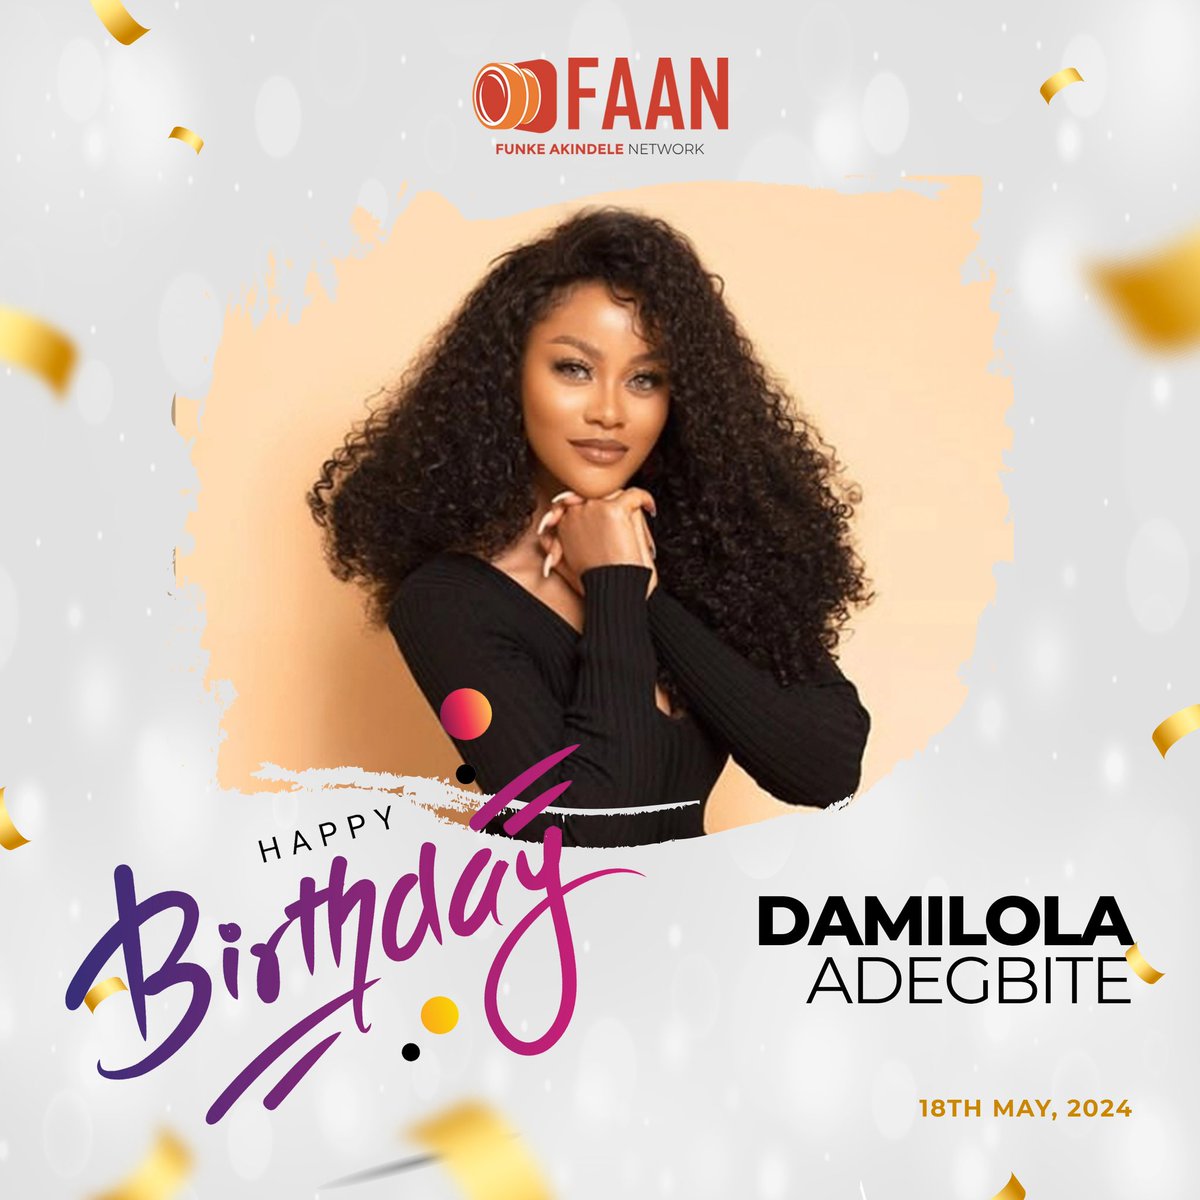 Cheers to Damilola Adegbite! 💛

Happy Birthday and many more to come! 🎈🎉🥂
.
.
.
#faantv
#BirthdayWishes #fansoffunkeakindele
#funkejenifaakindele #funkeakindelenetwork